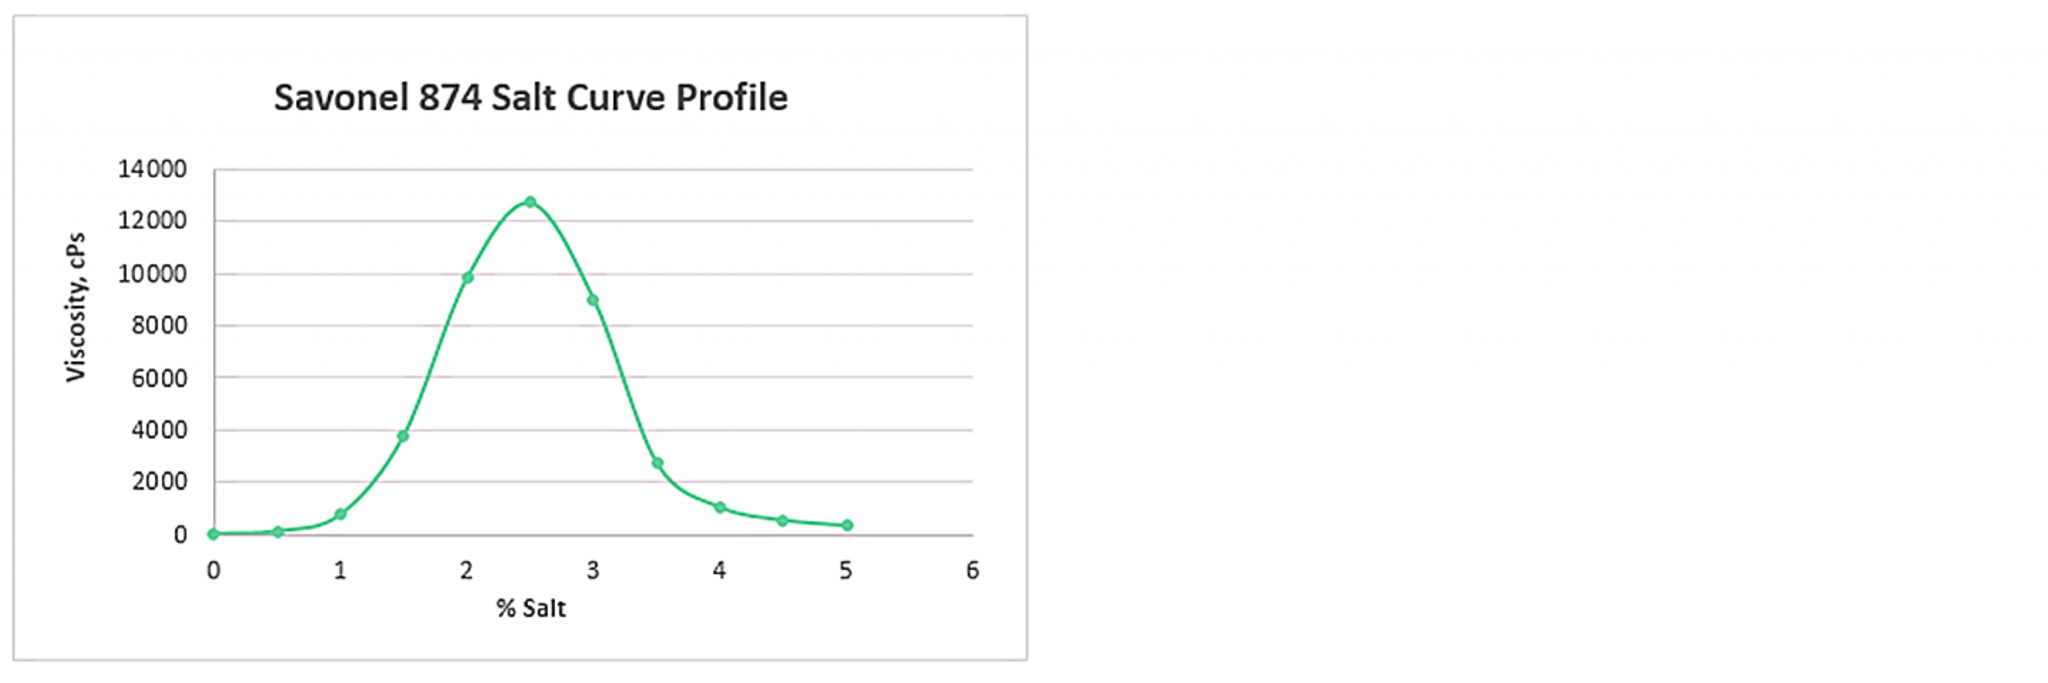 sufravon 874 salt curve profile graph